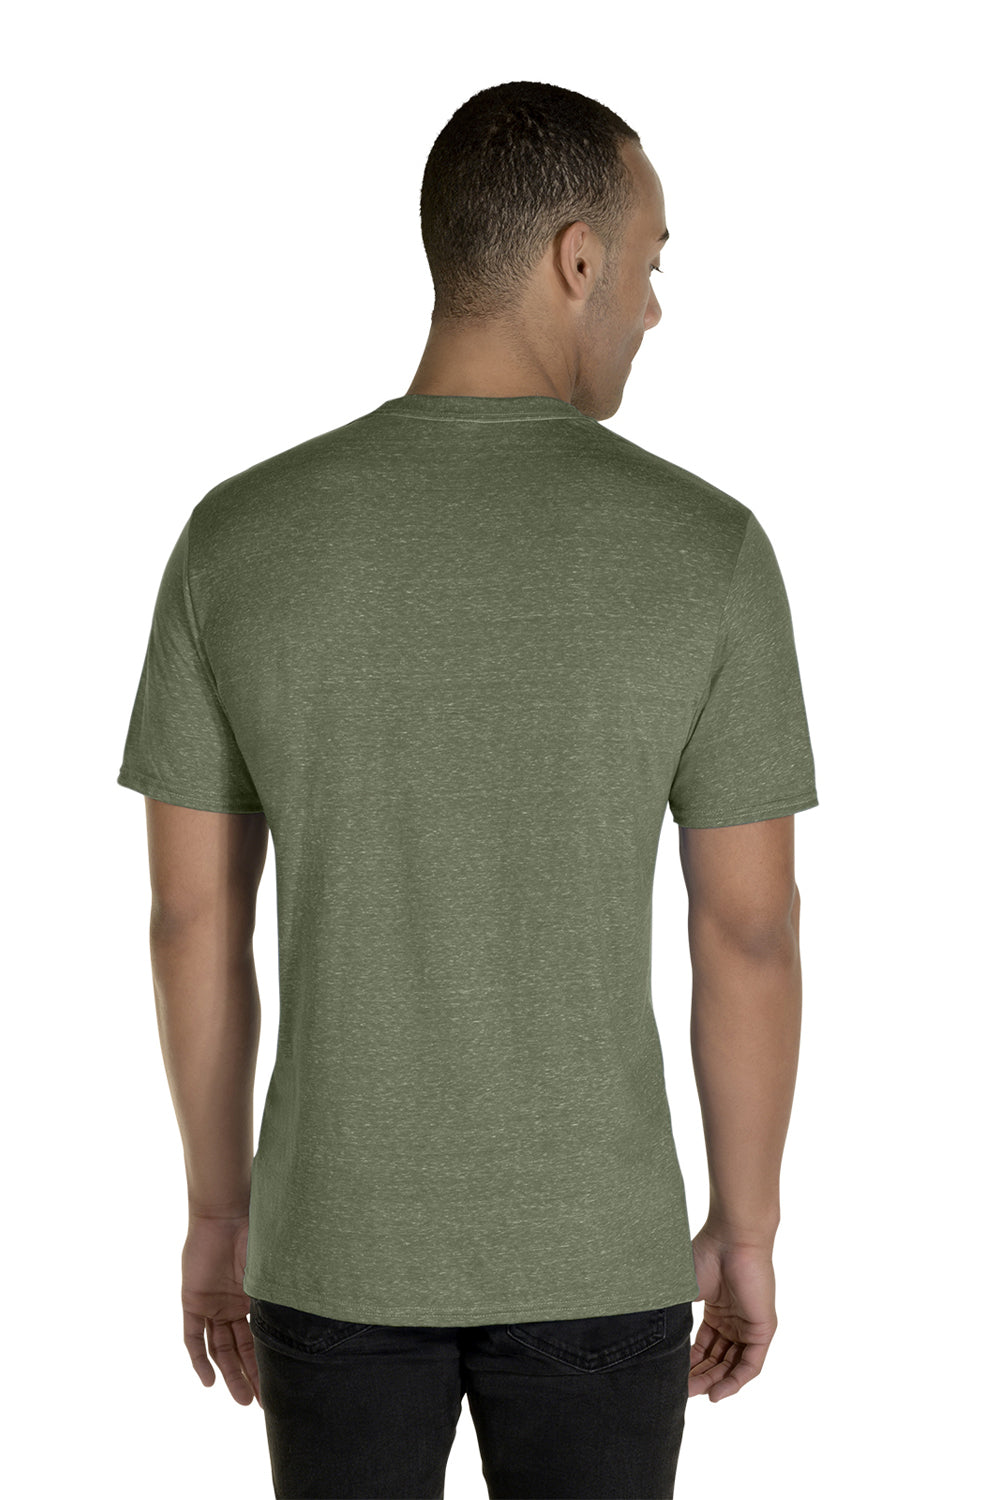 Jerzees 88MR Mens Vintage Snow Short Sleeve Crewneck T-Shirt Heather Military Green Back